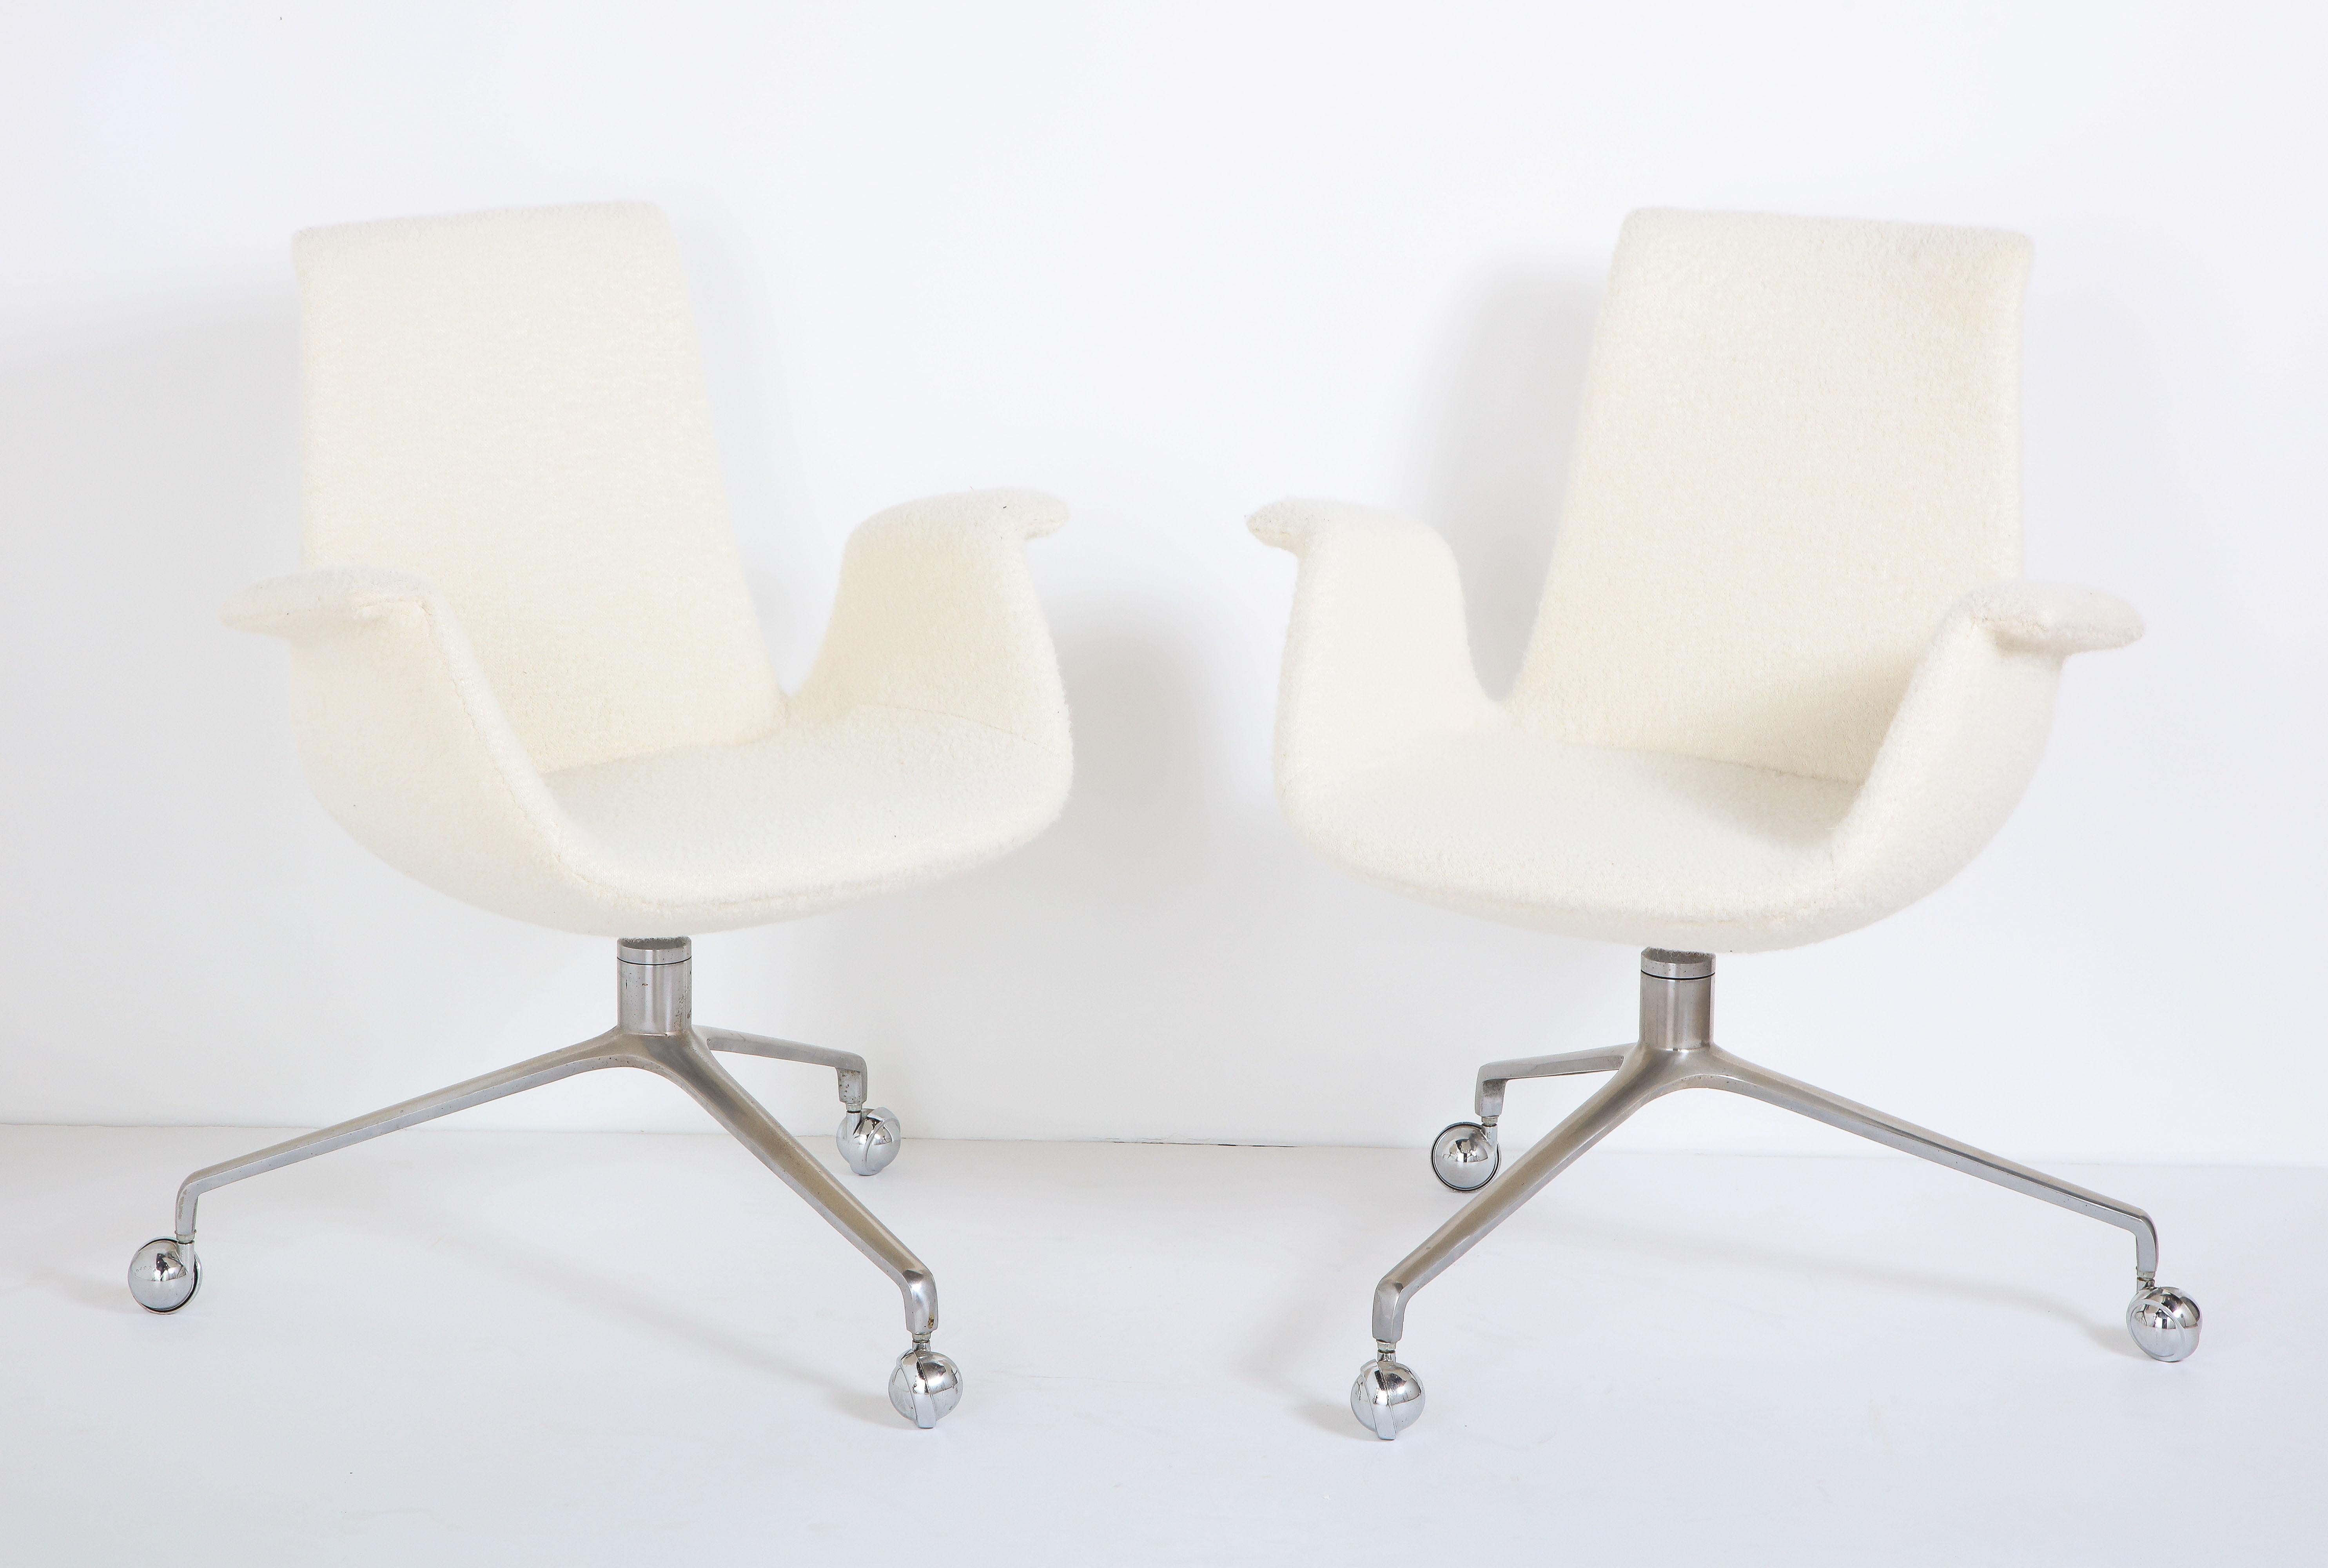 Pair of Preben Fabricius bird chairs, Denmark, 1950s. Cast aluminum base, reupholstered in ALT 